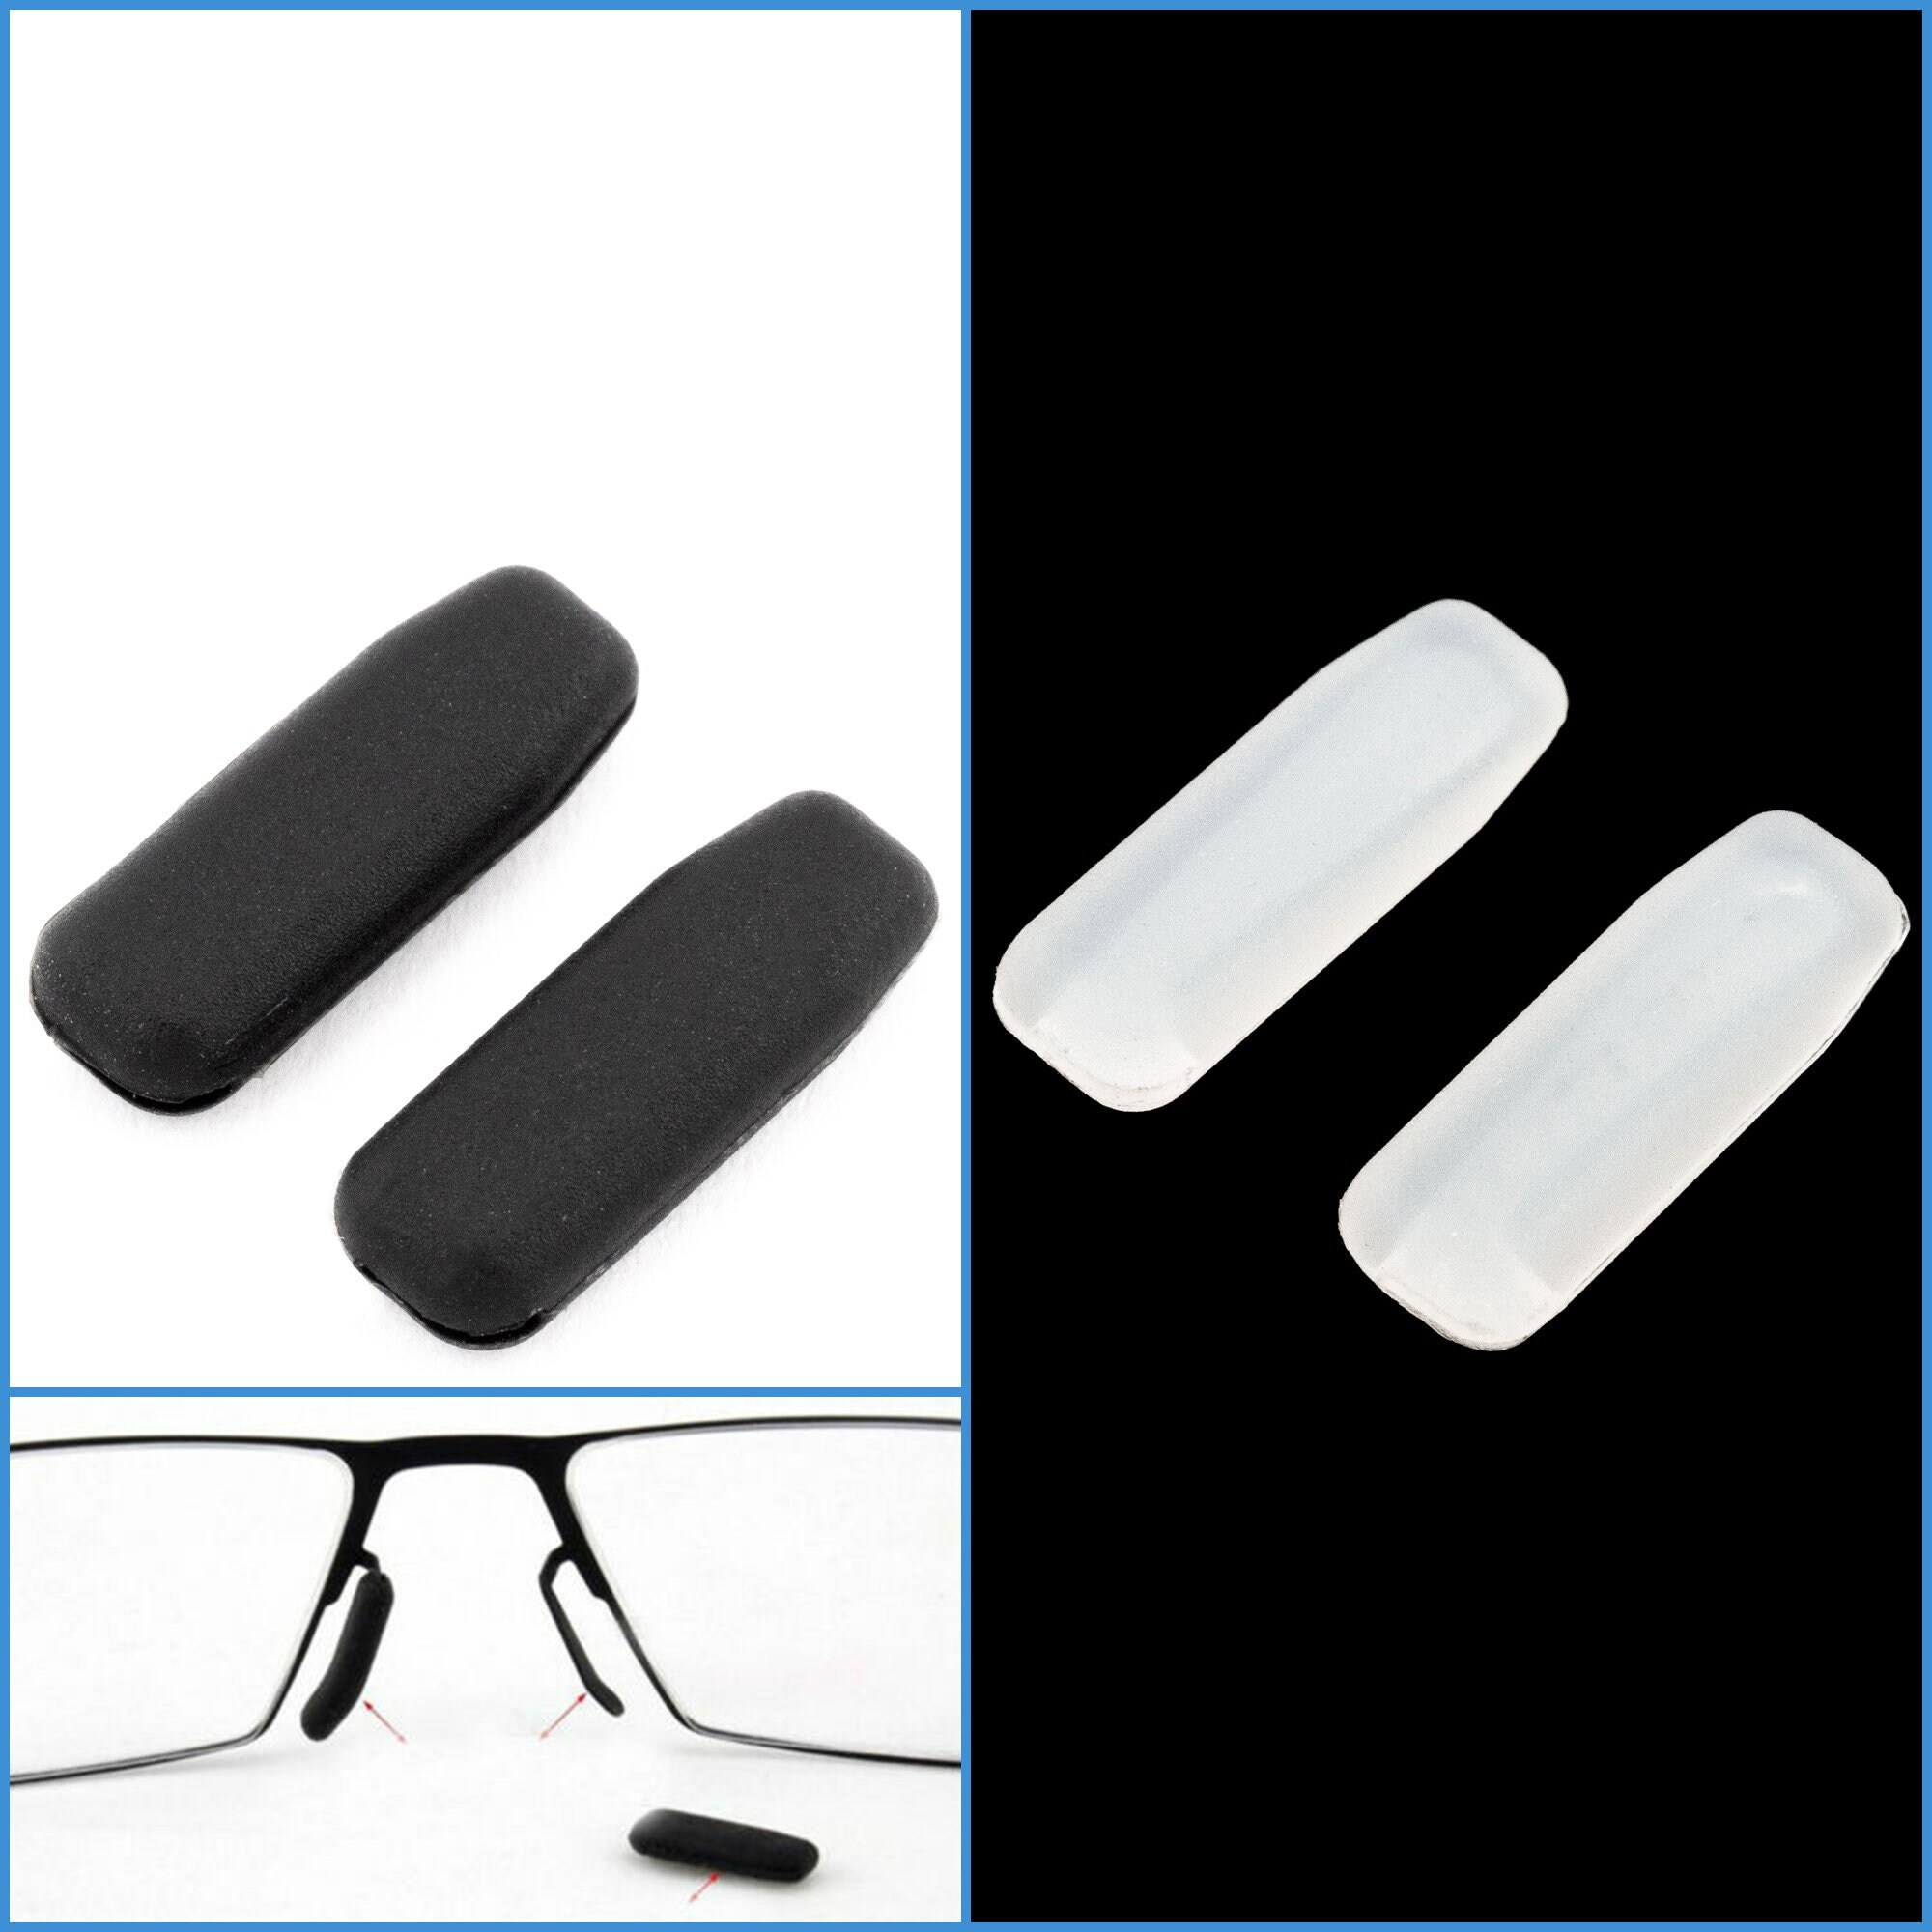 4pcs Eye Glasses Nose Pads, Stick On Anti-slip Soft Silicone